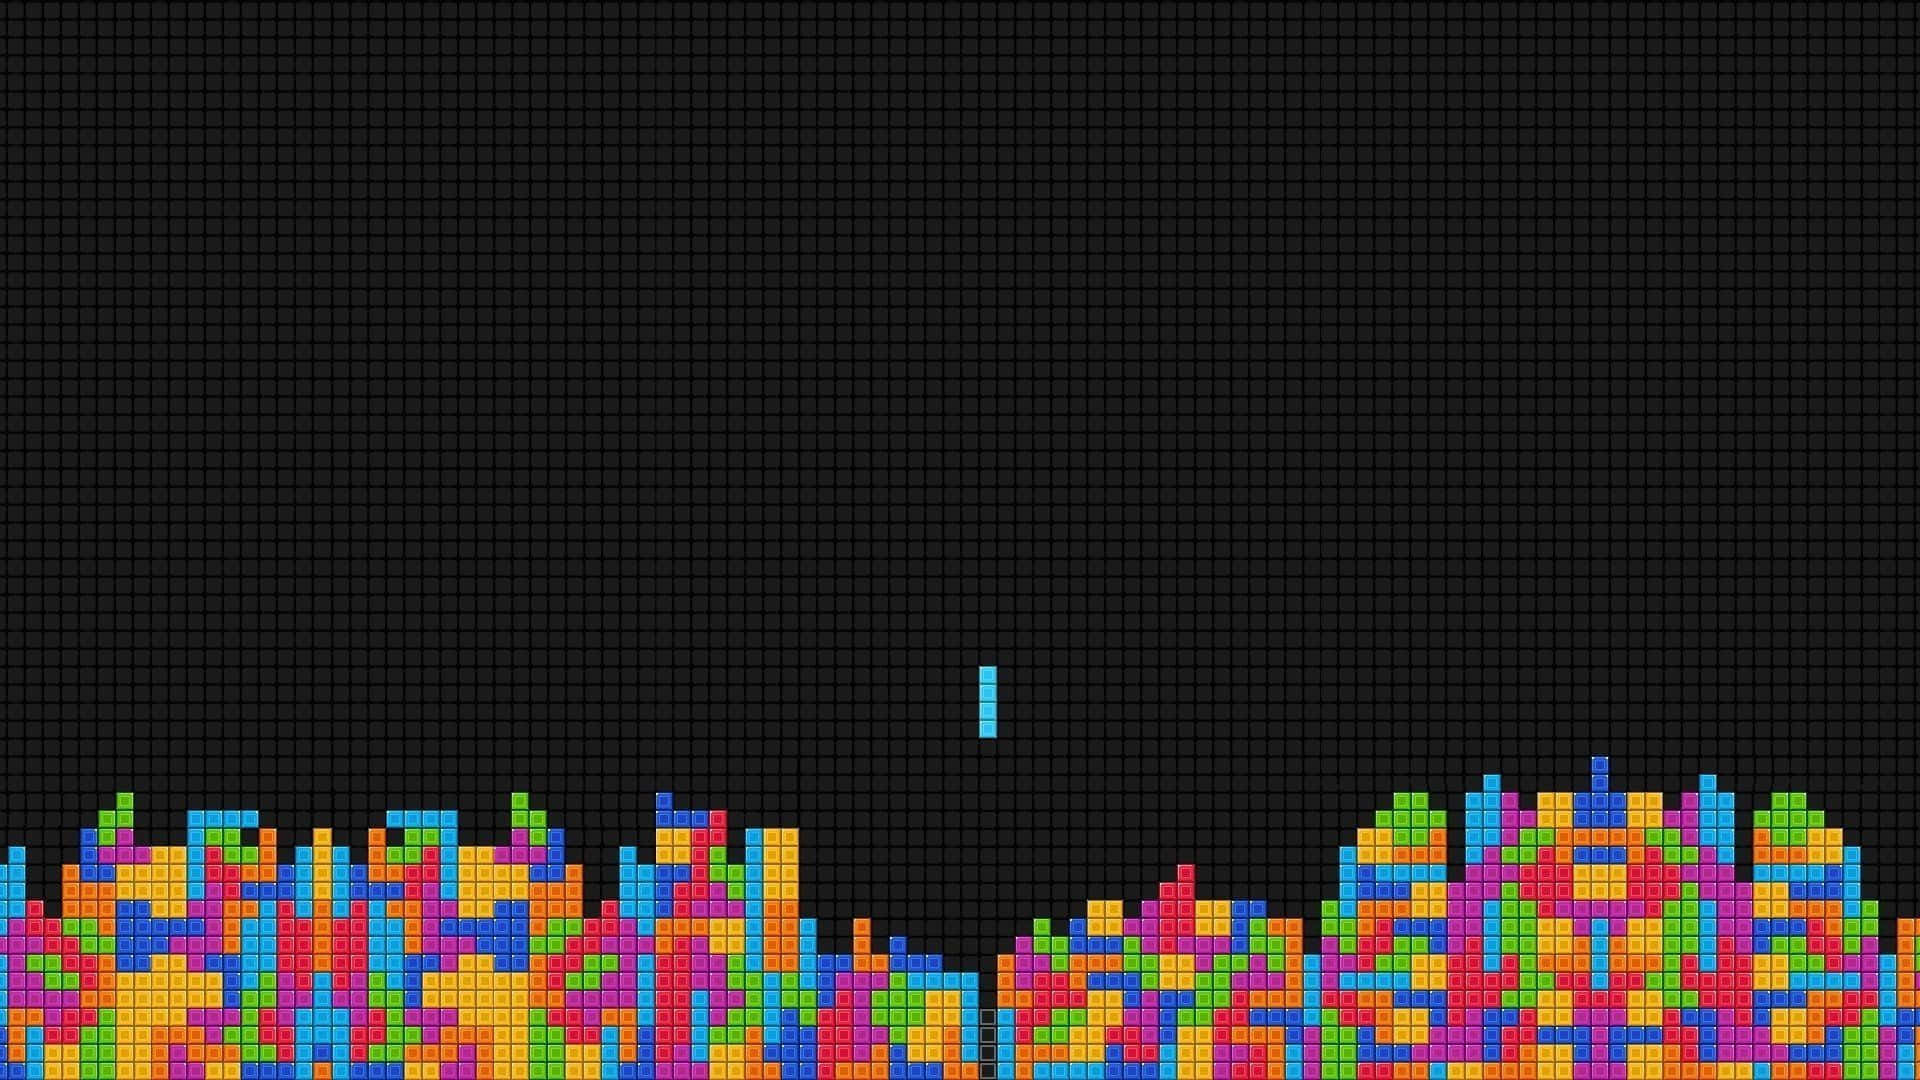 Tetris1920 X 1080 Bakgrund